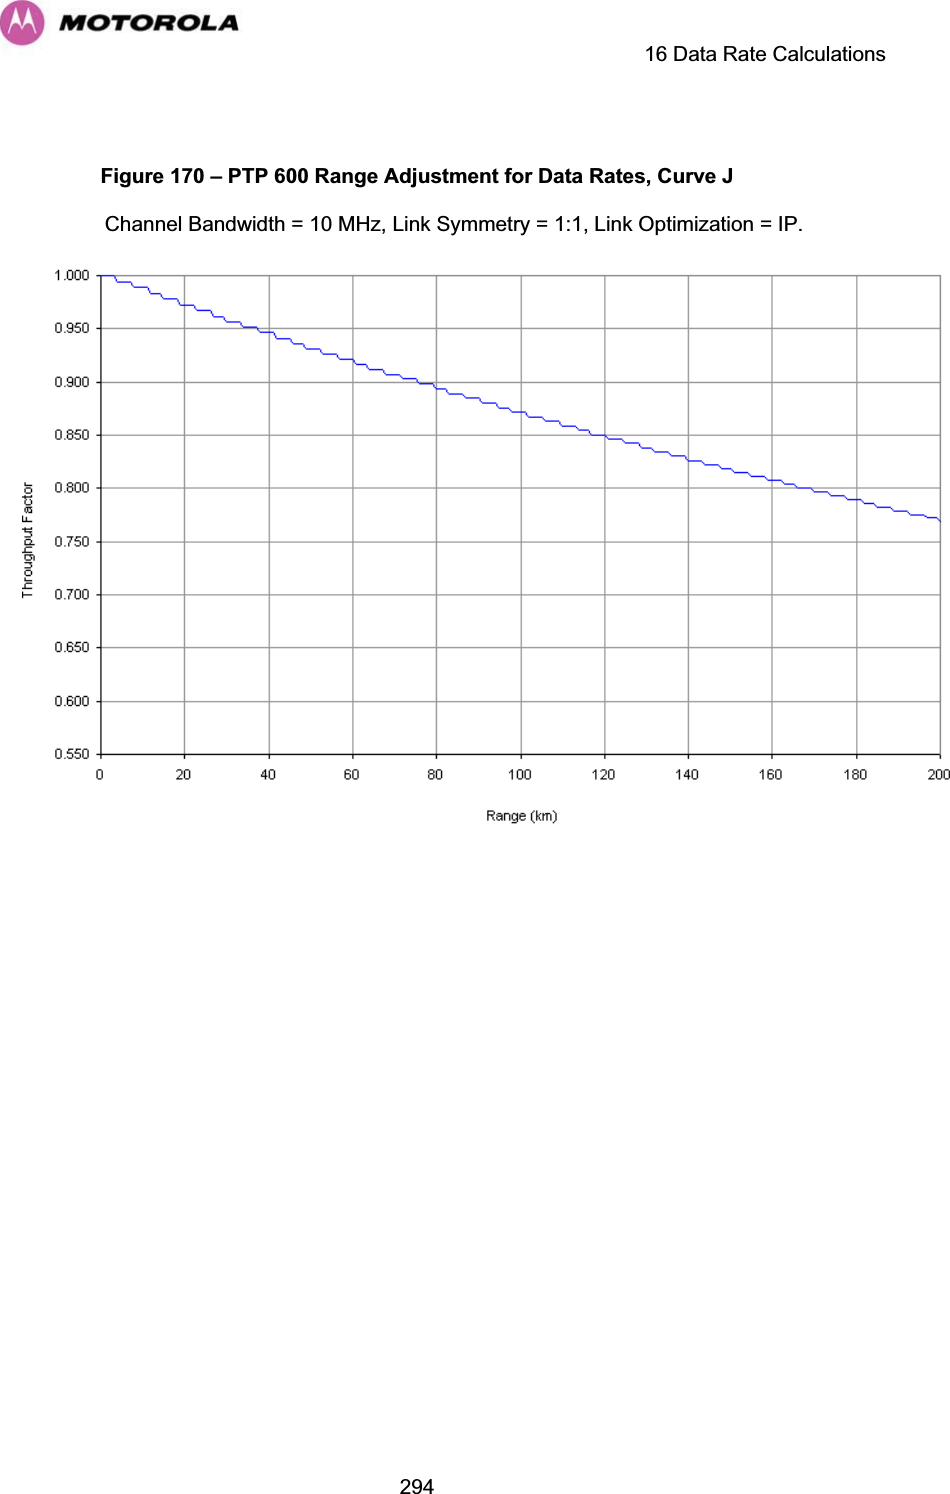     16 Data Rate Calculations  294 Figure 170 – PTP 600 Range Adjustment for Data Rates, Curve J Channel Bandwidth = 10 MHz, Link Symmetry = 1:1, Link Optimization = IP.  